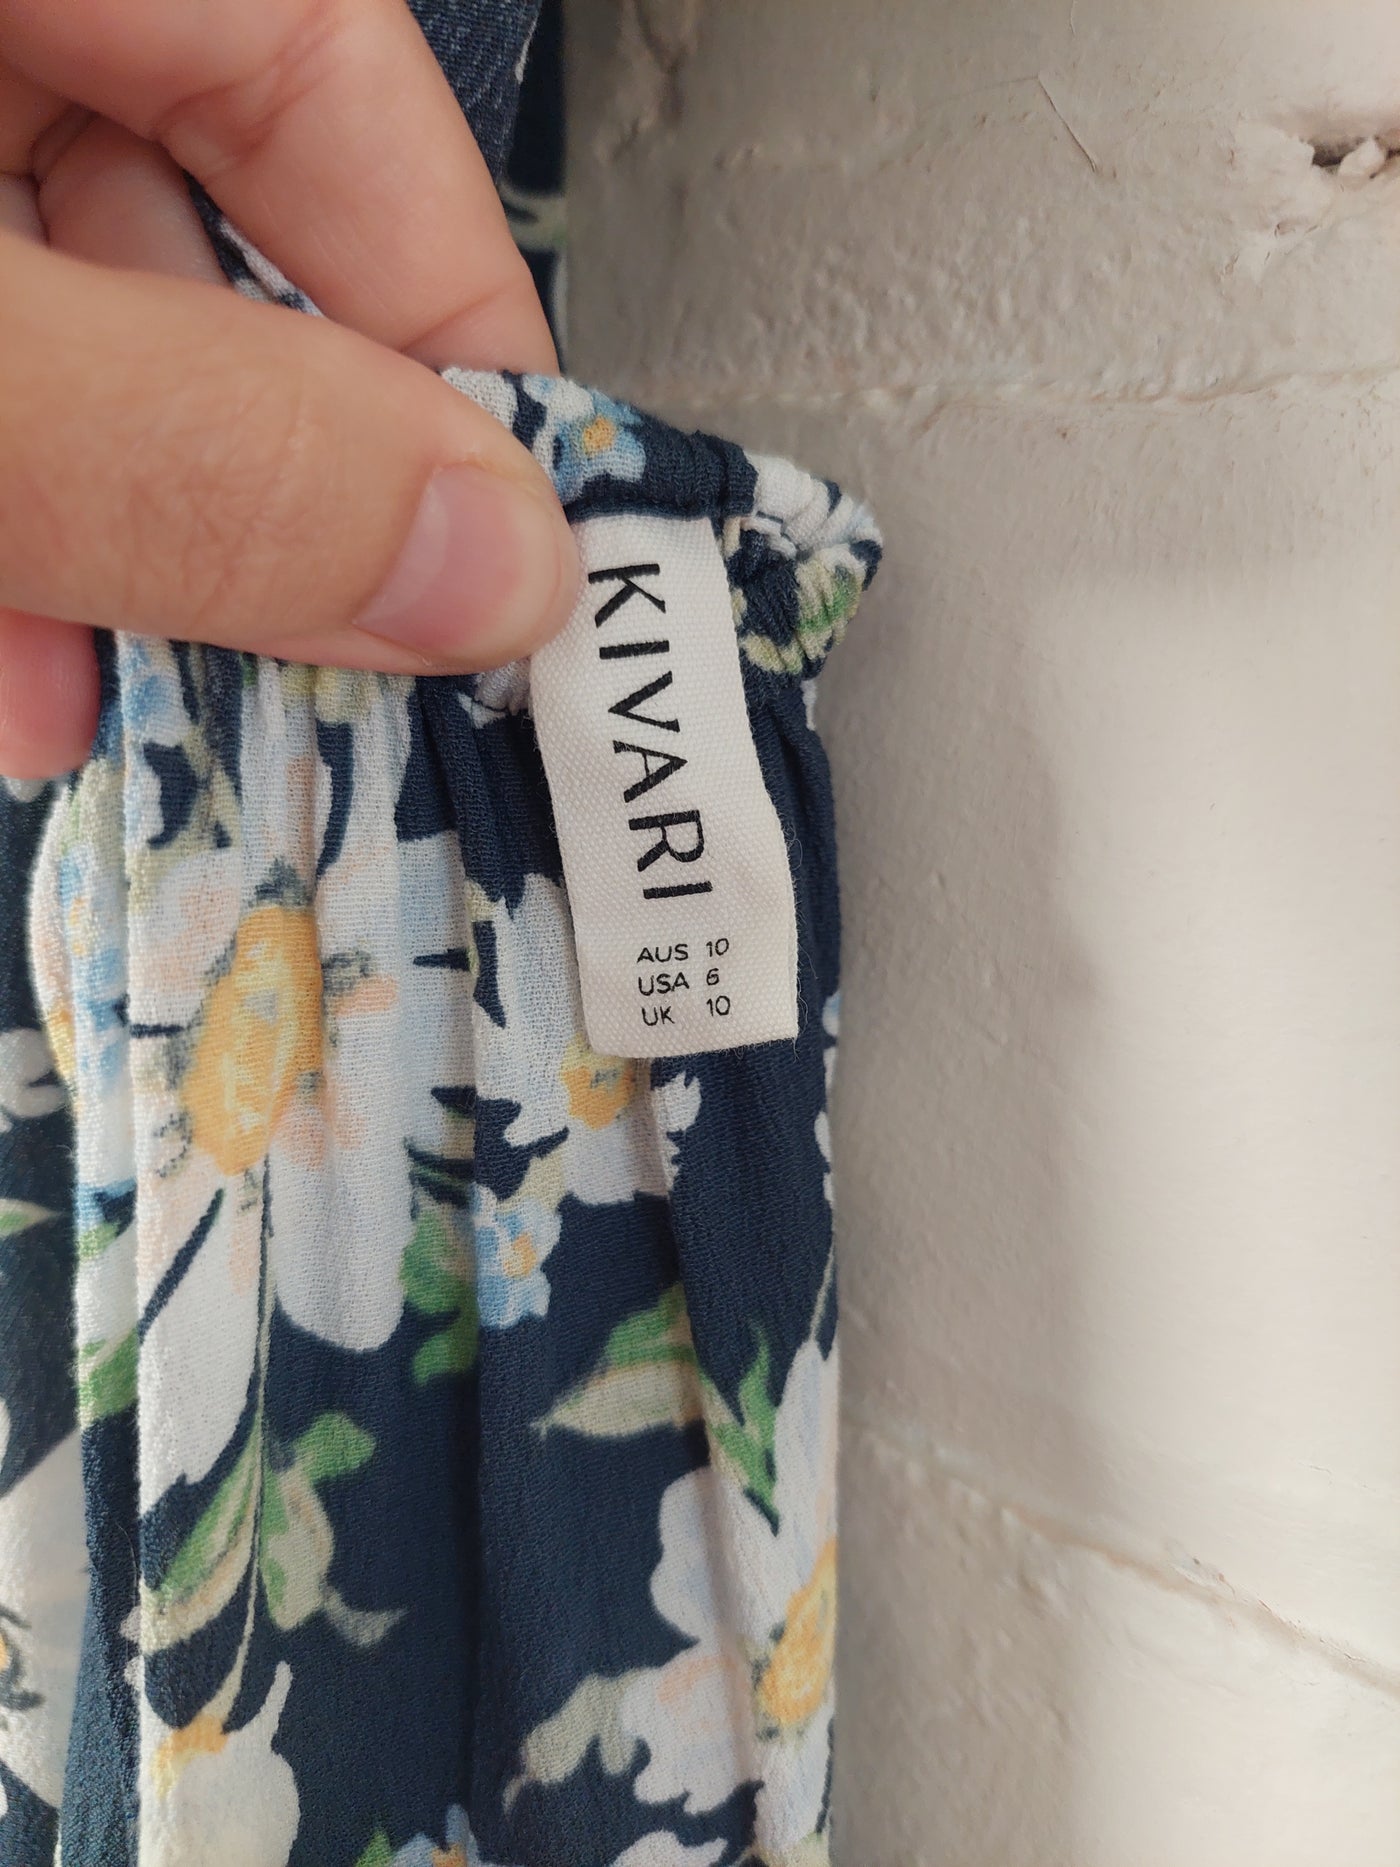 KIVARI Allie Tie Back Midi Dress - Navy Floral, Size 10